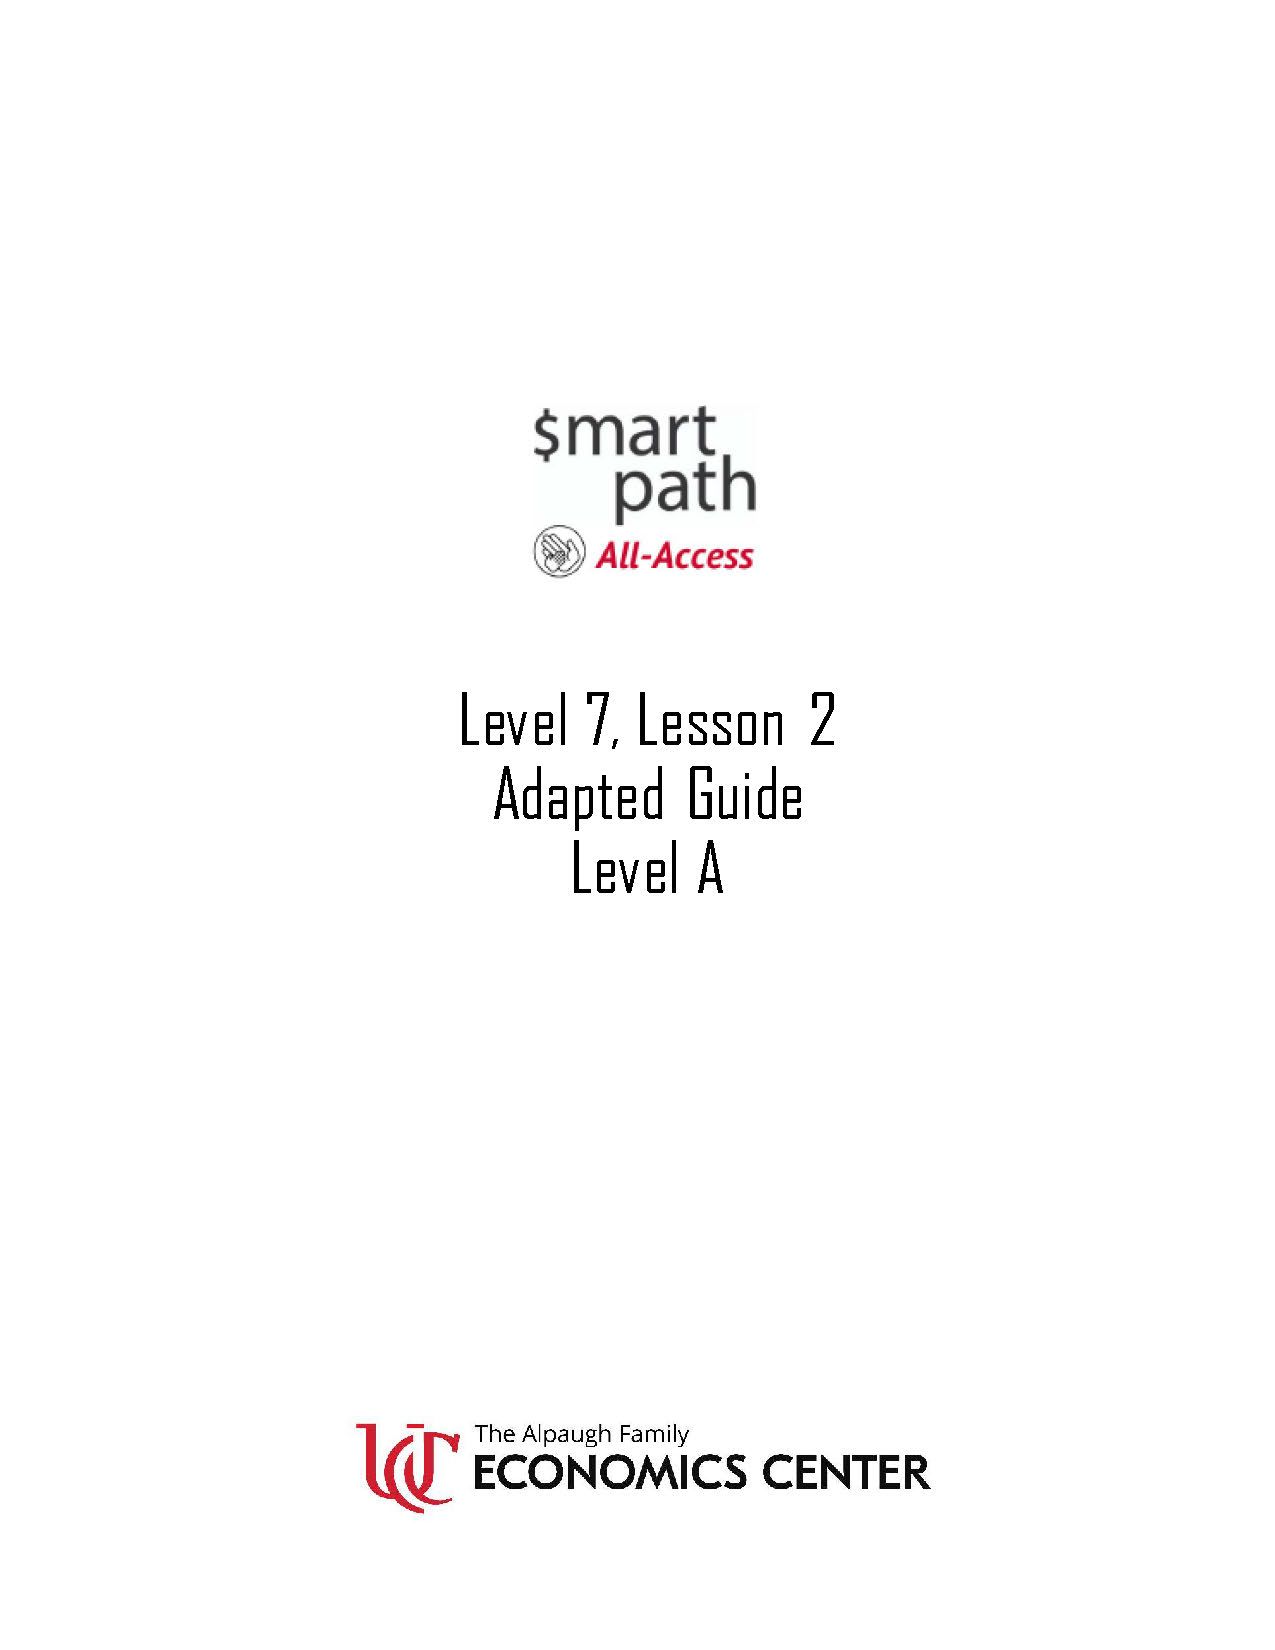 Level 7 Lesson 2 Cover